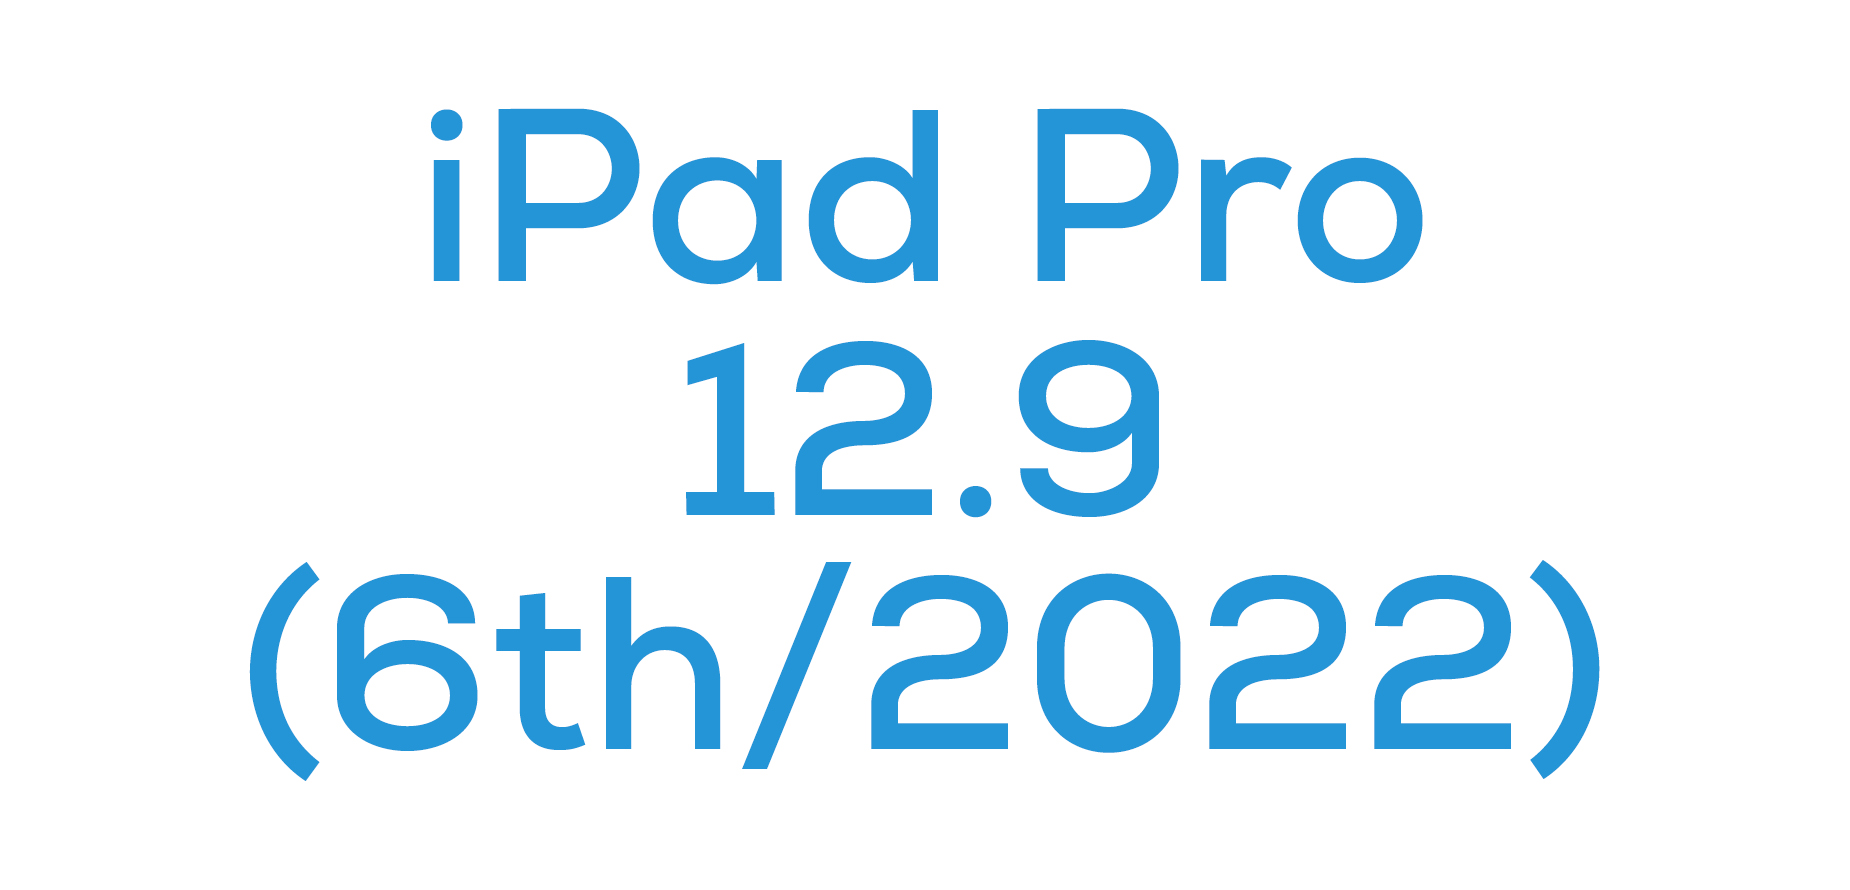 iPad Pro 12.9 (6th/2022)